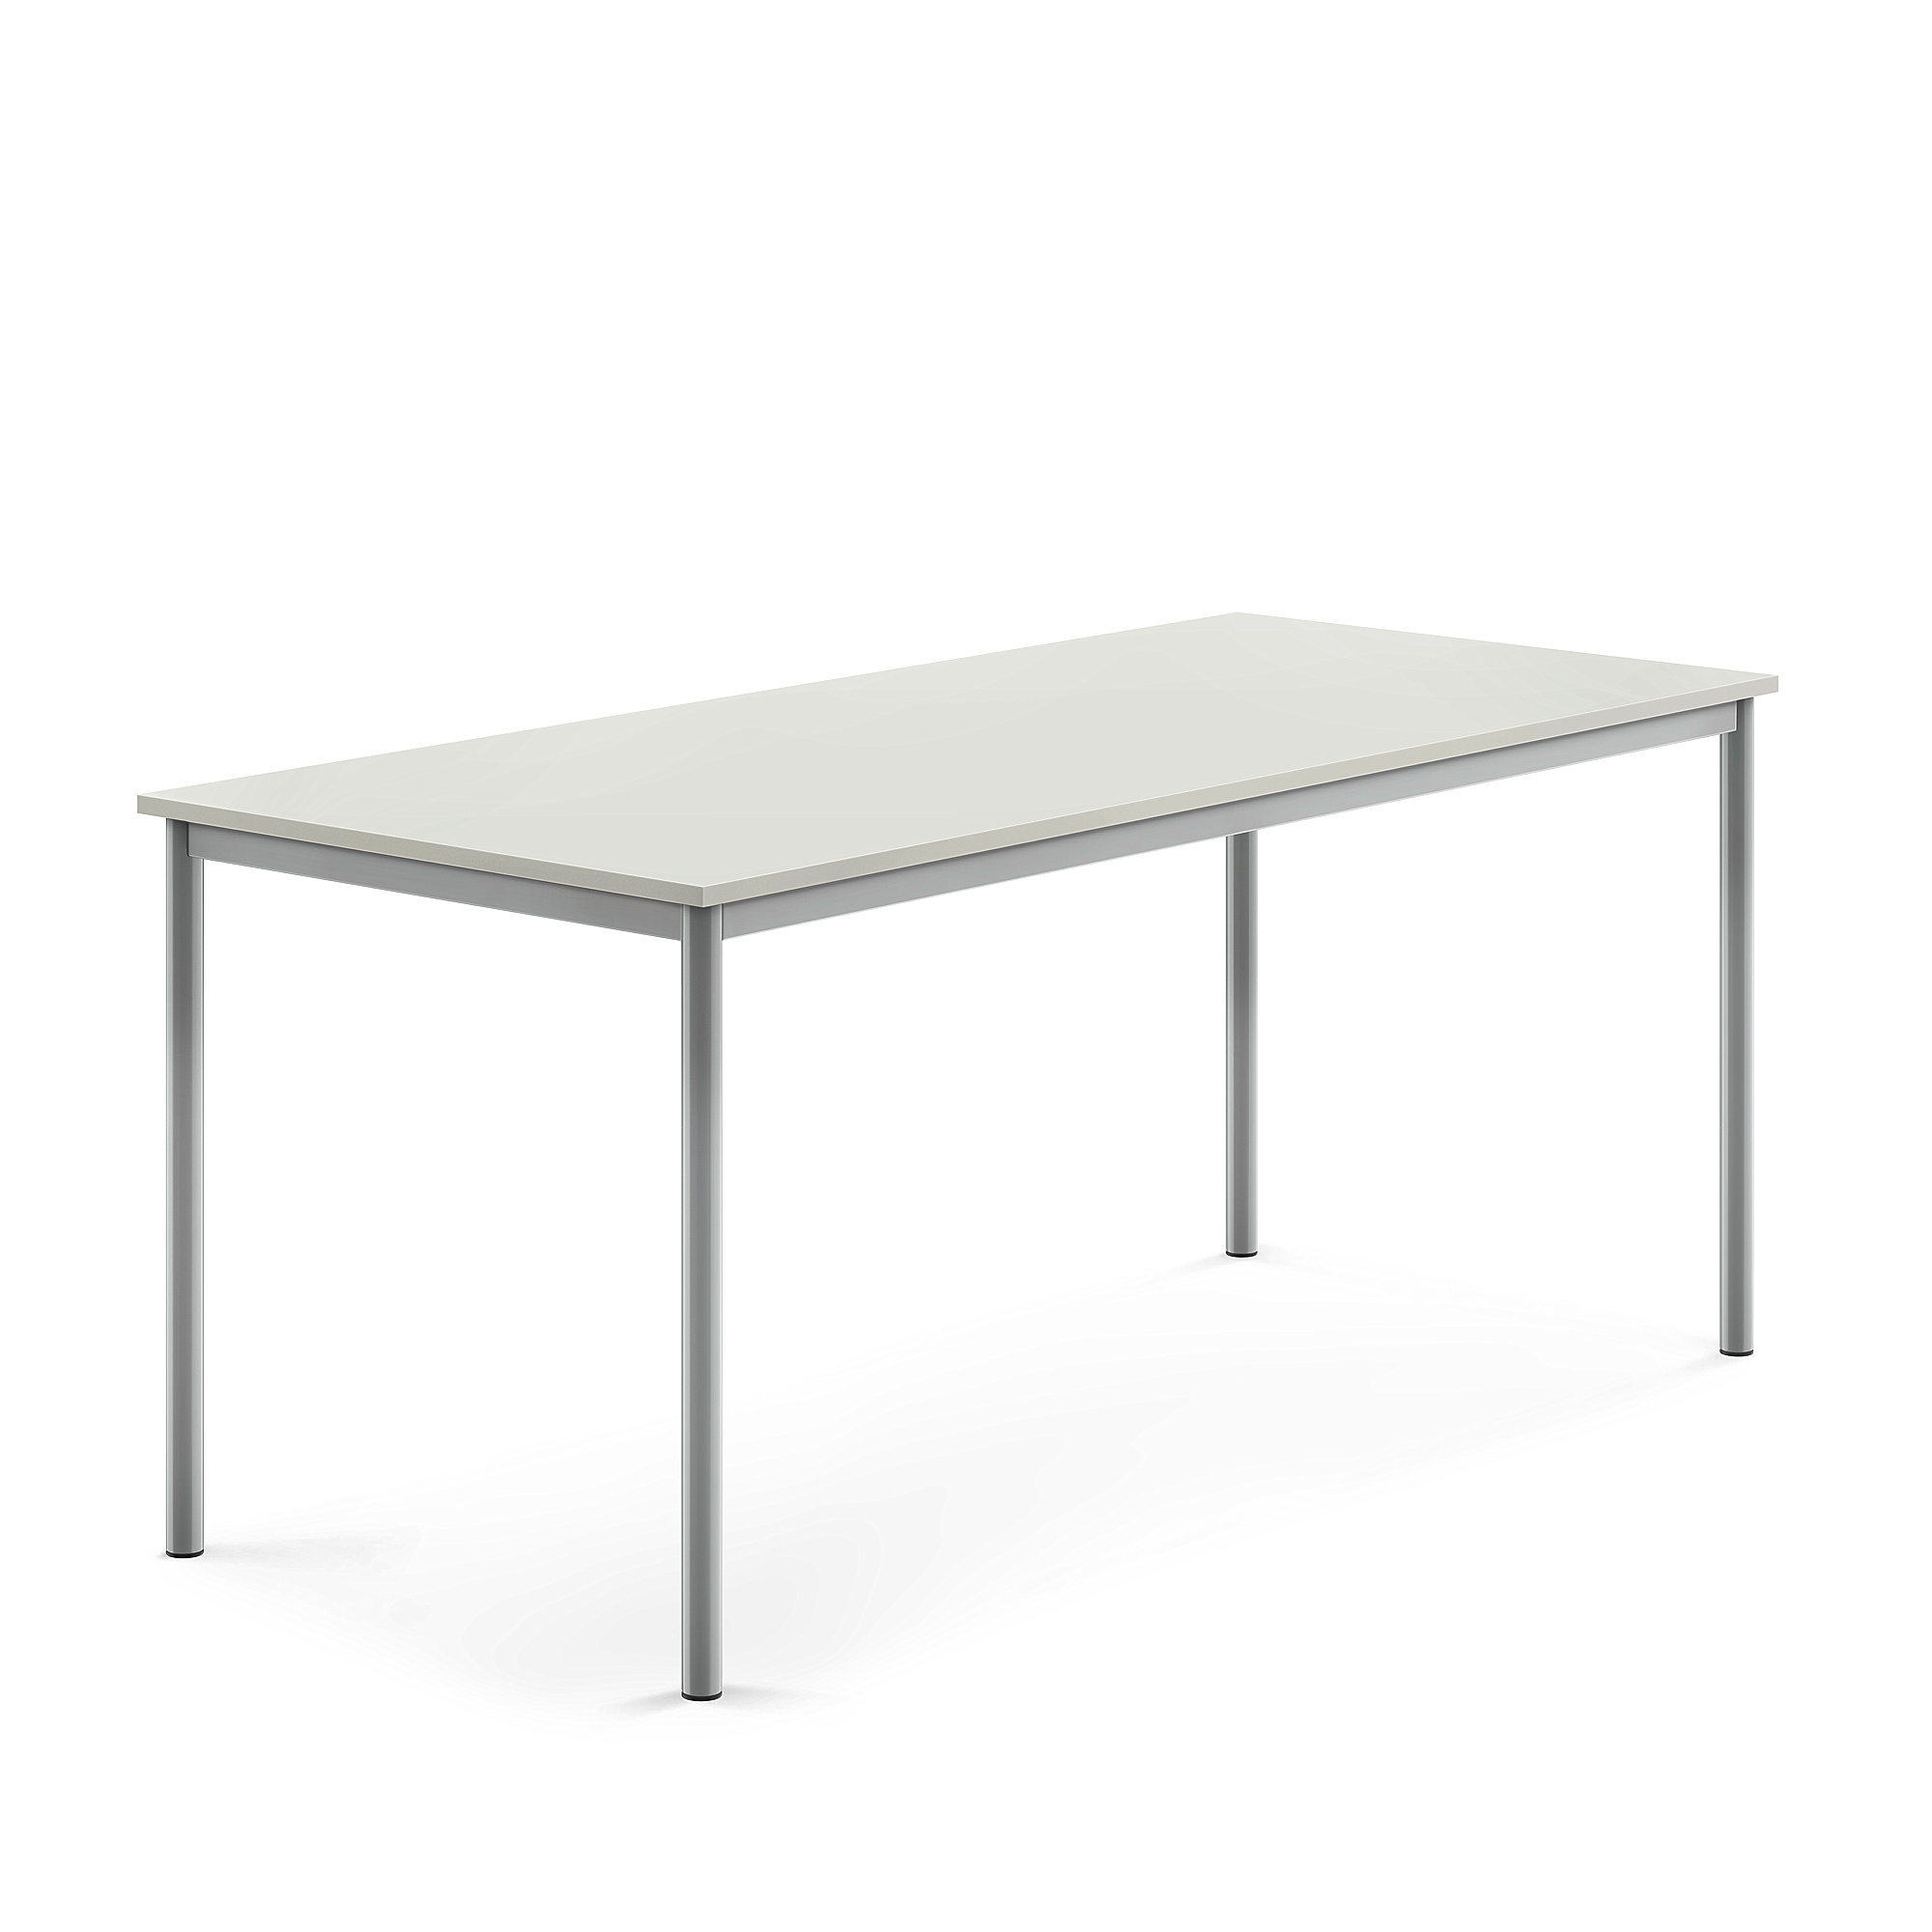 Stůl SONITUS, 1800x800x760 mm, stříbrné nohy, HPL deska tlumící hluk, šedá